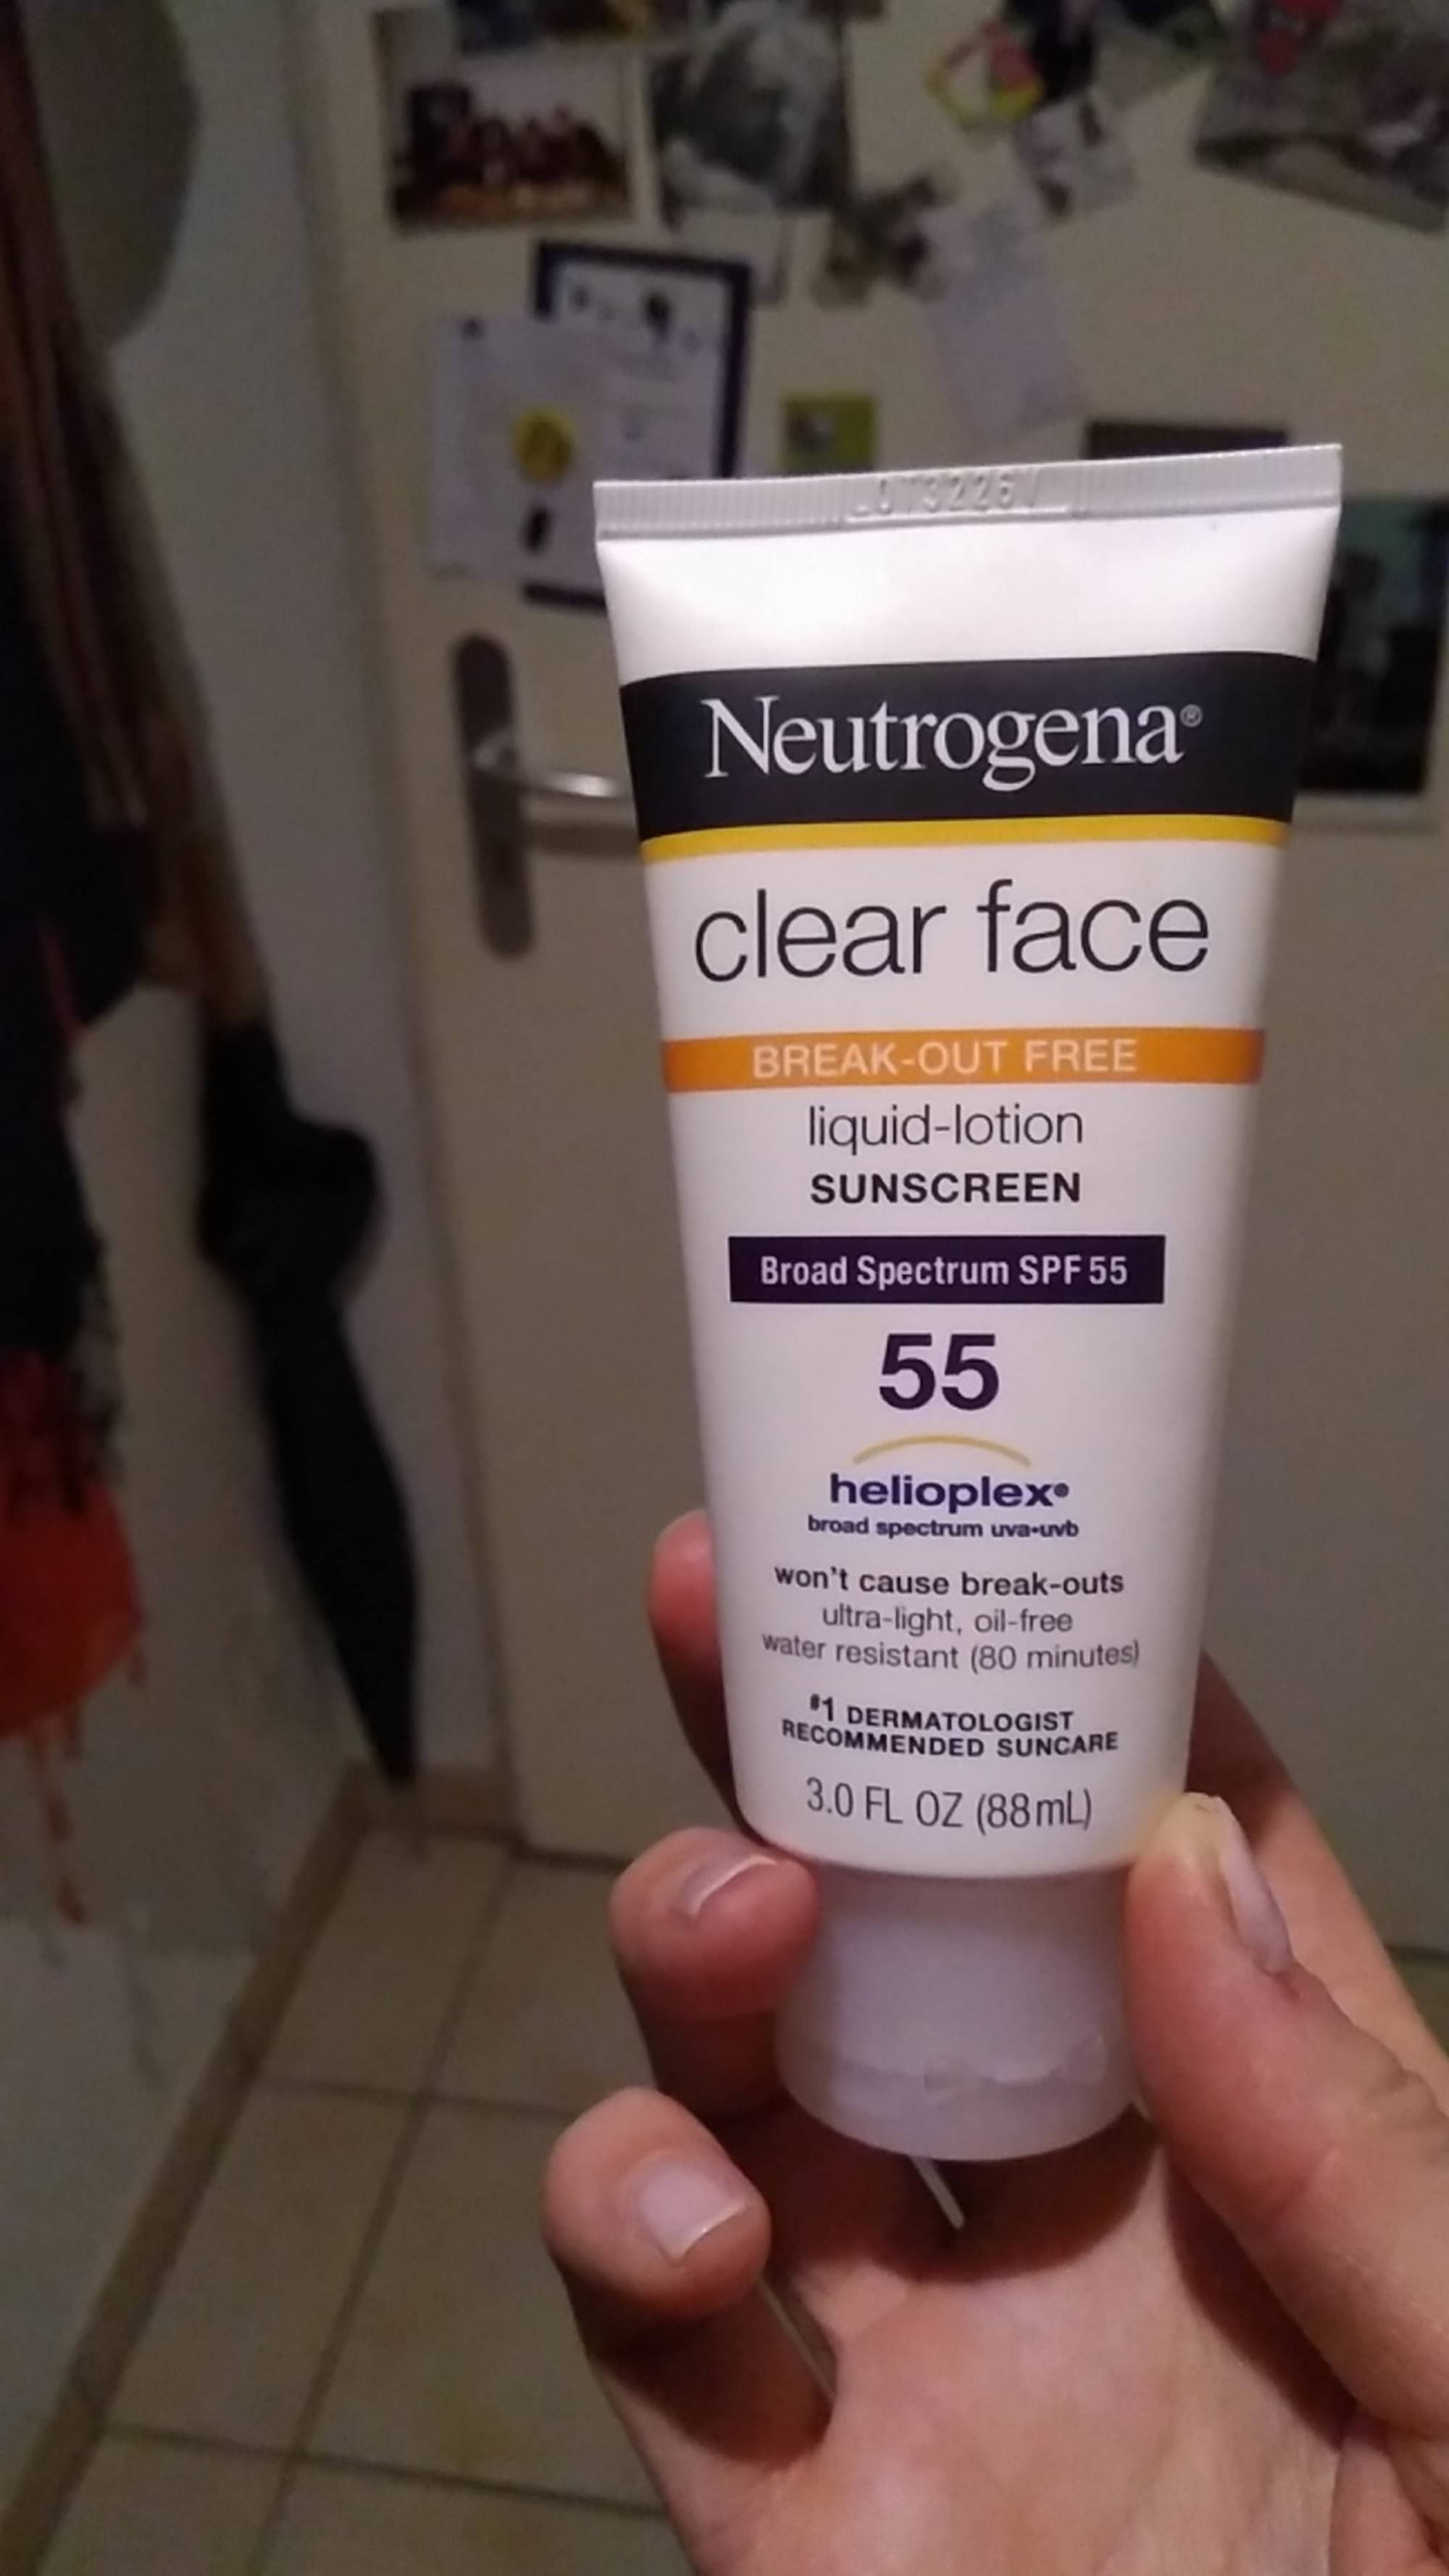 NEUTROGENA - Liquid-lotion sunscreen clear face spf 55